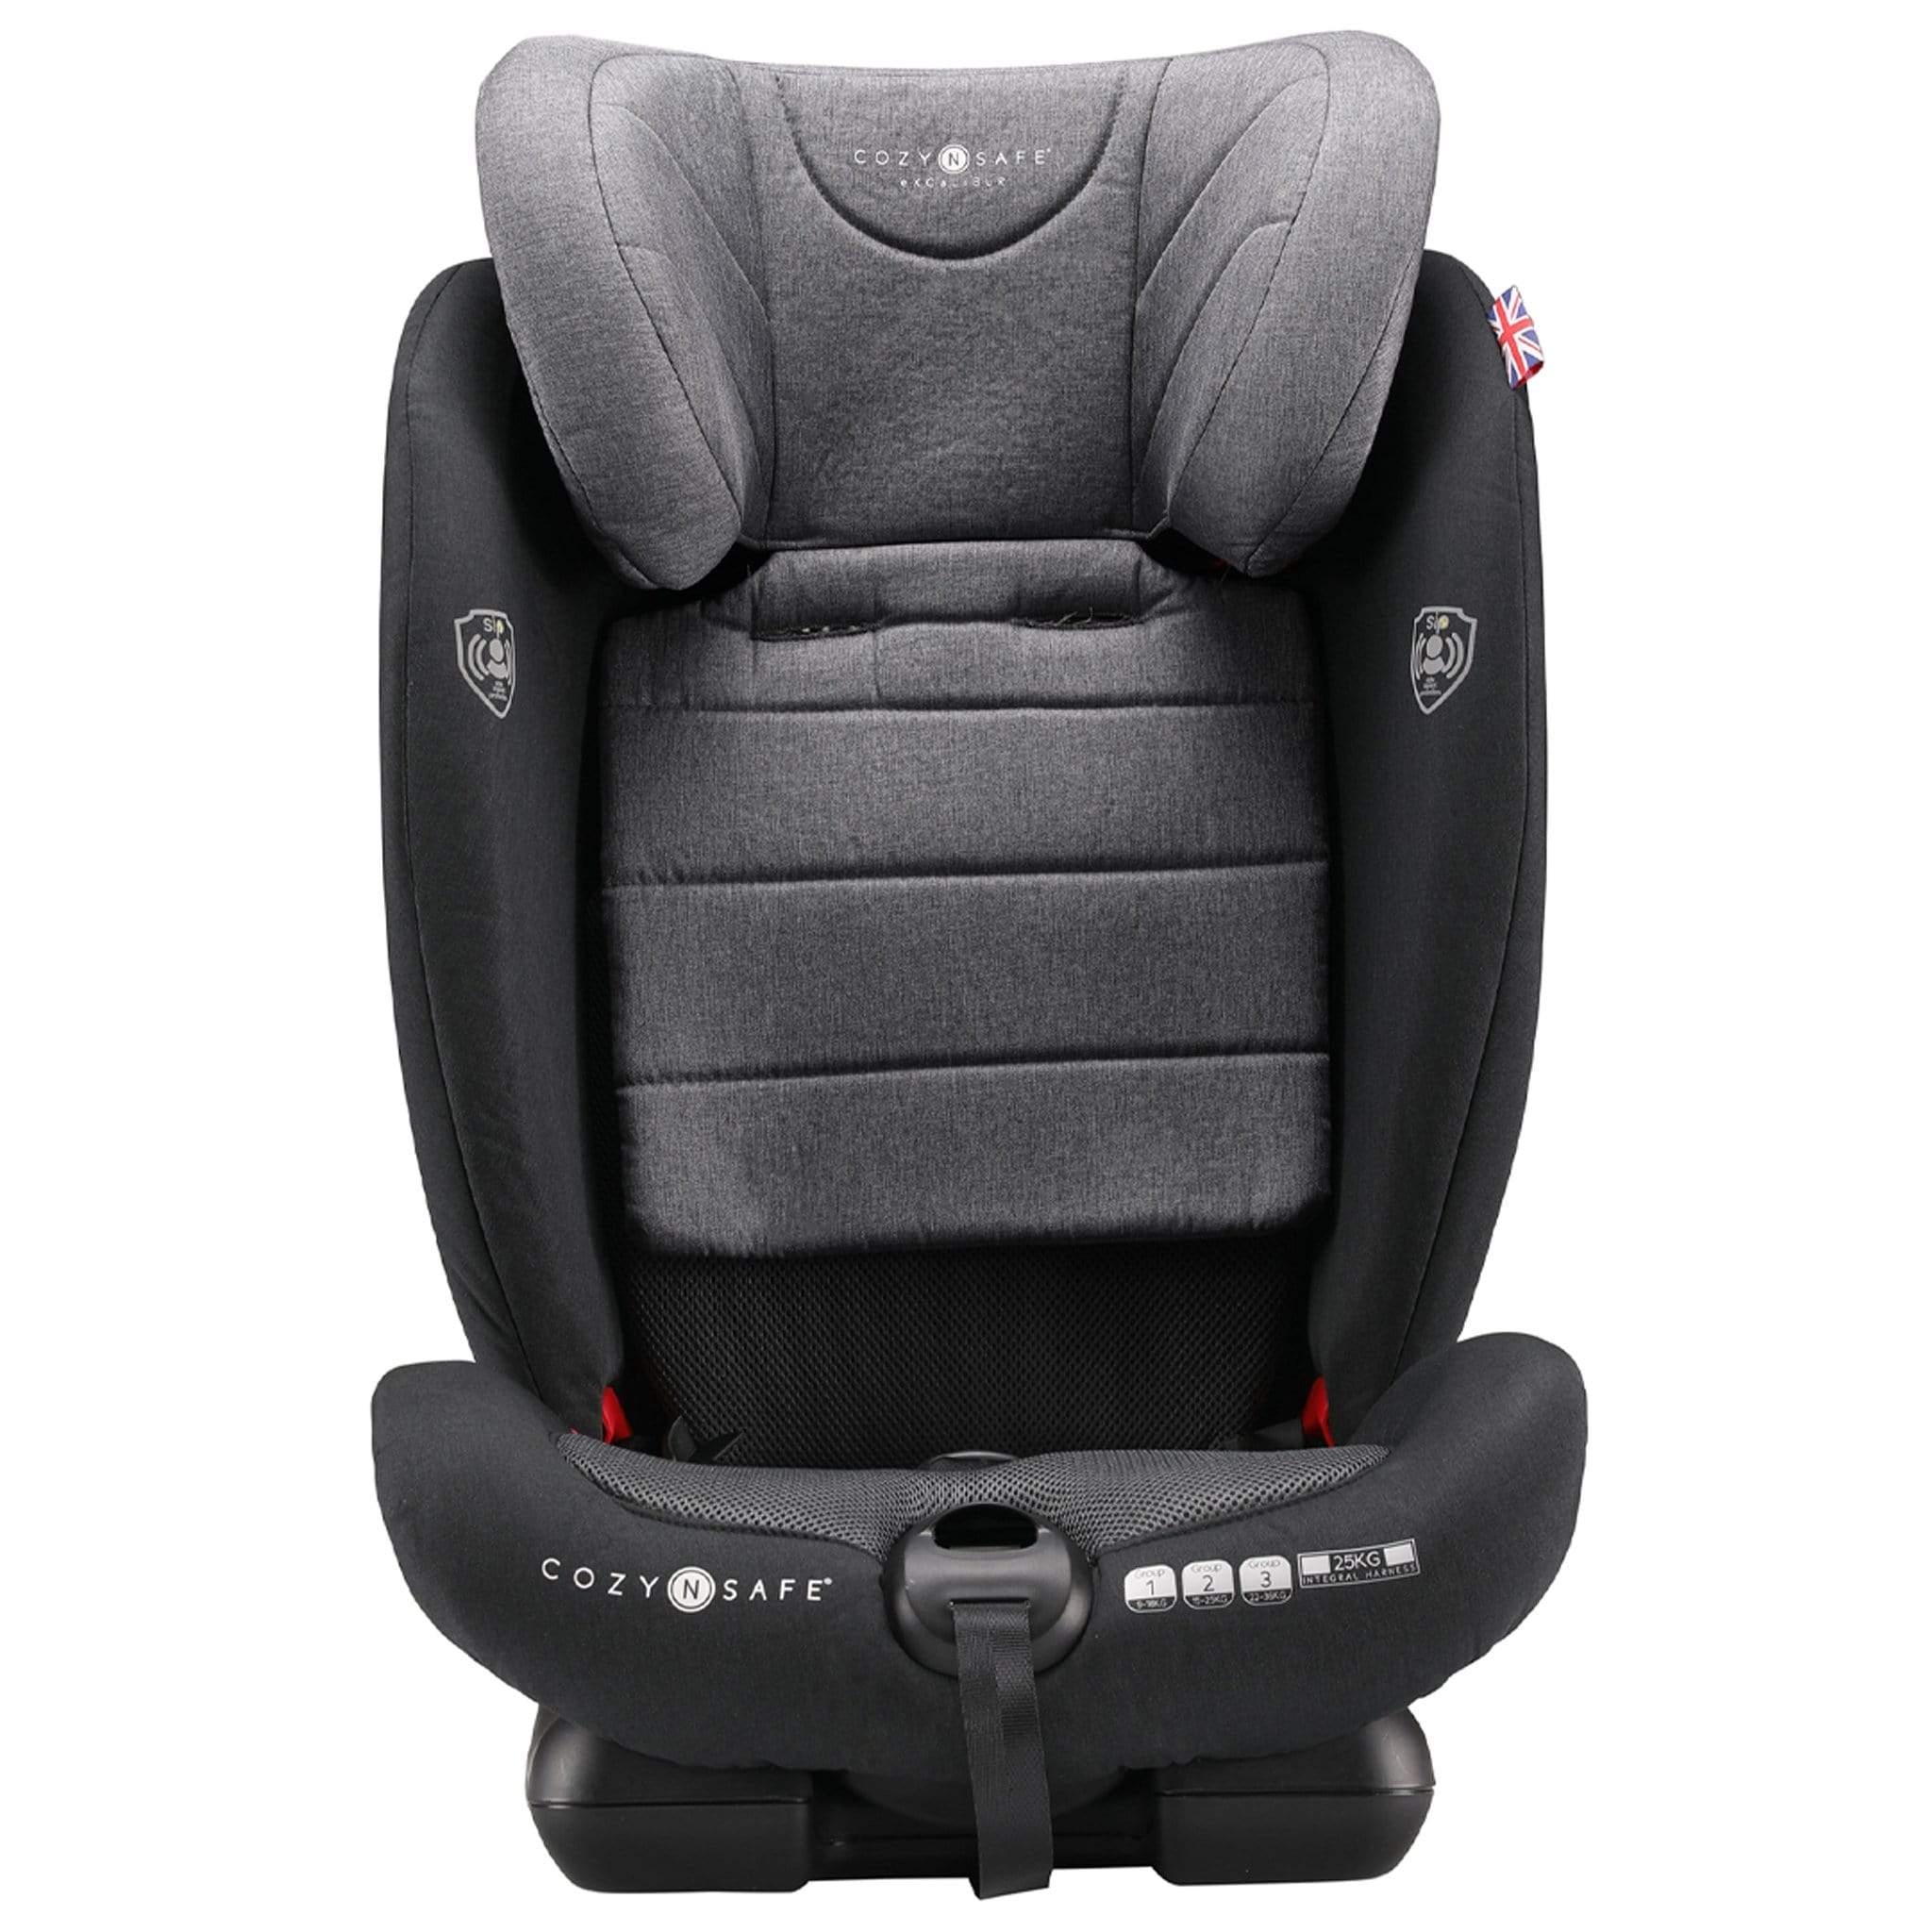 Cozy N Safe Car Seats The Cozy N Safe Excalibur Group 1/2/3 25kg Harness Car Seat in Black and Grey EST-02-01-Excalibur